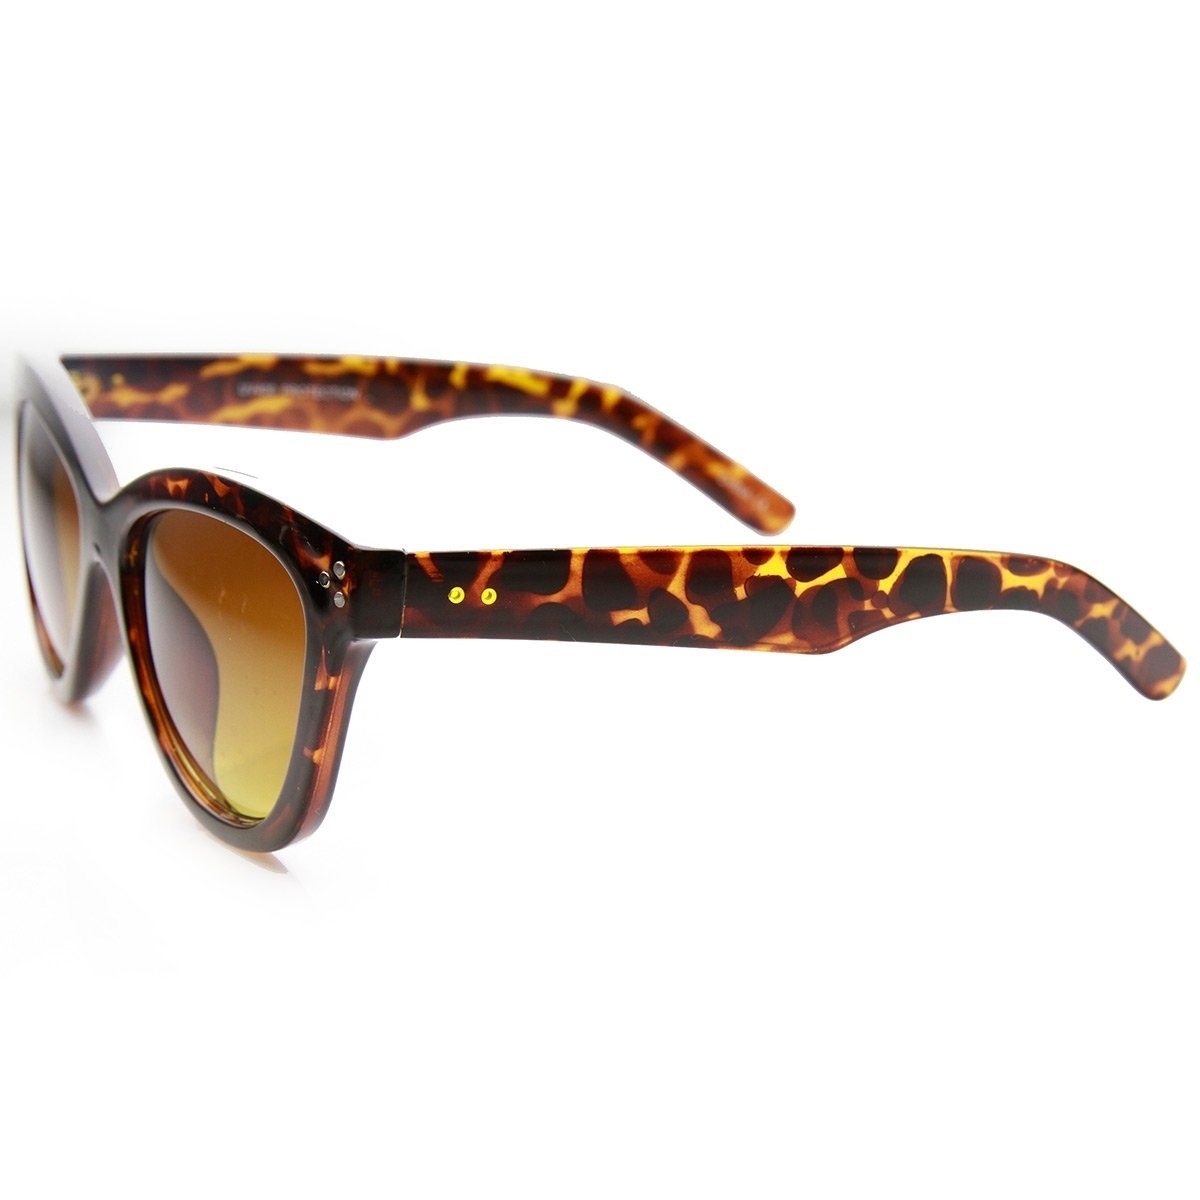 Womens Fashion Oversized Oval Bold Rim Butterfly Cat Eye Sunglasses - Tortoise Amber